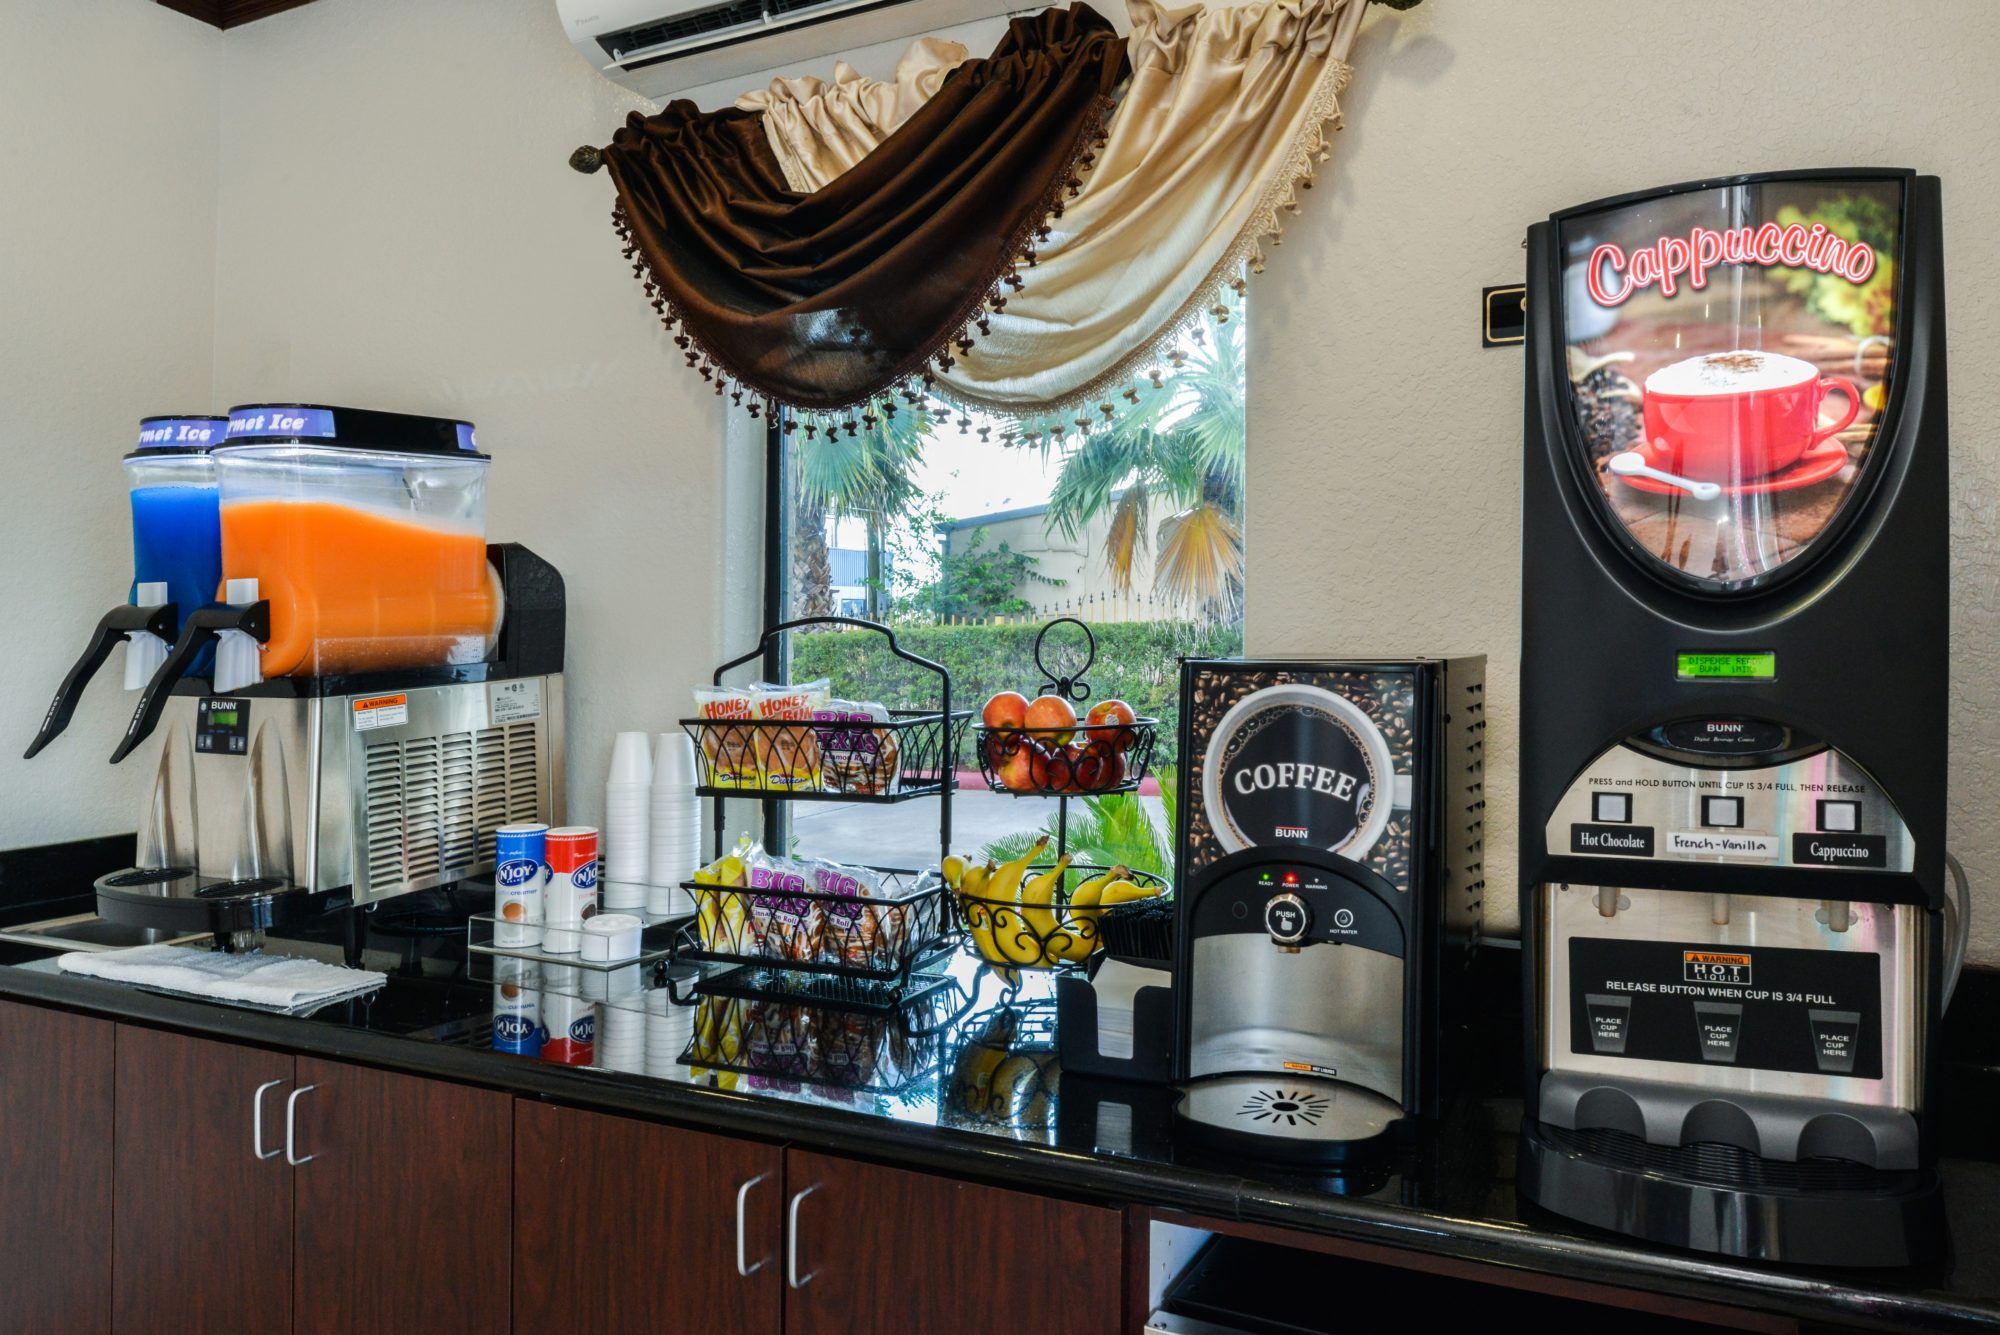 Breakfast display with fresh fruit, juice dispensers, coffee machines